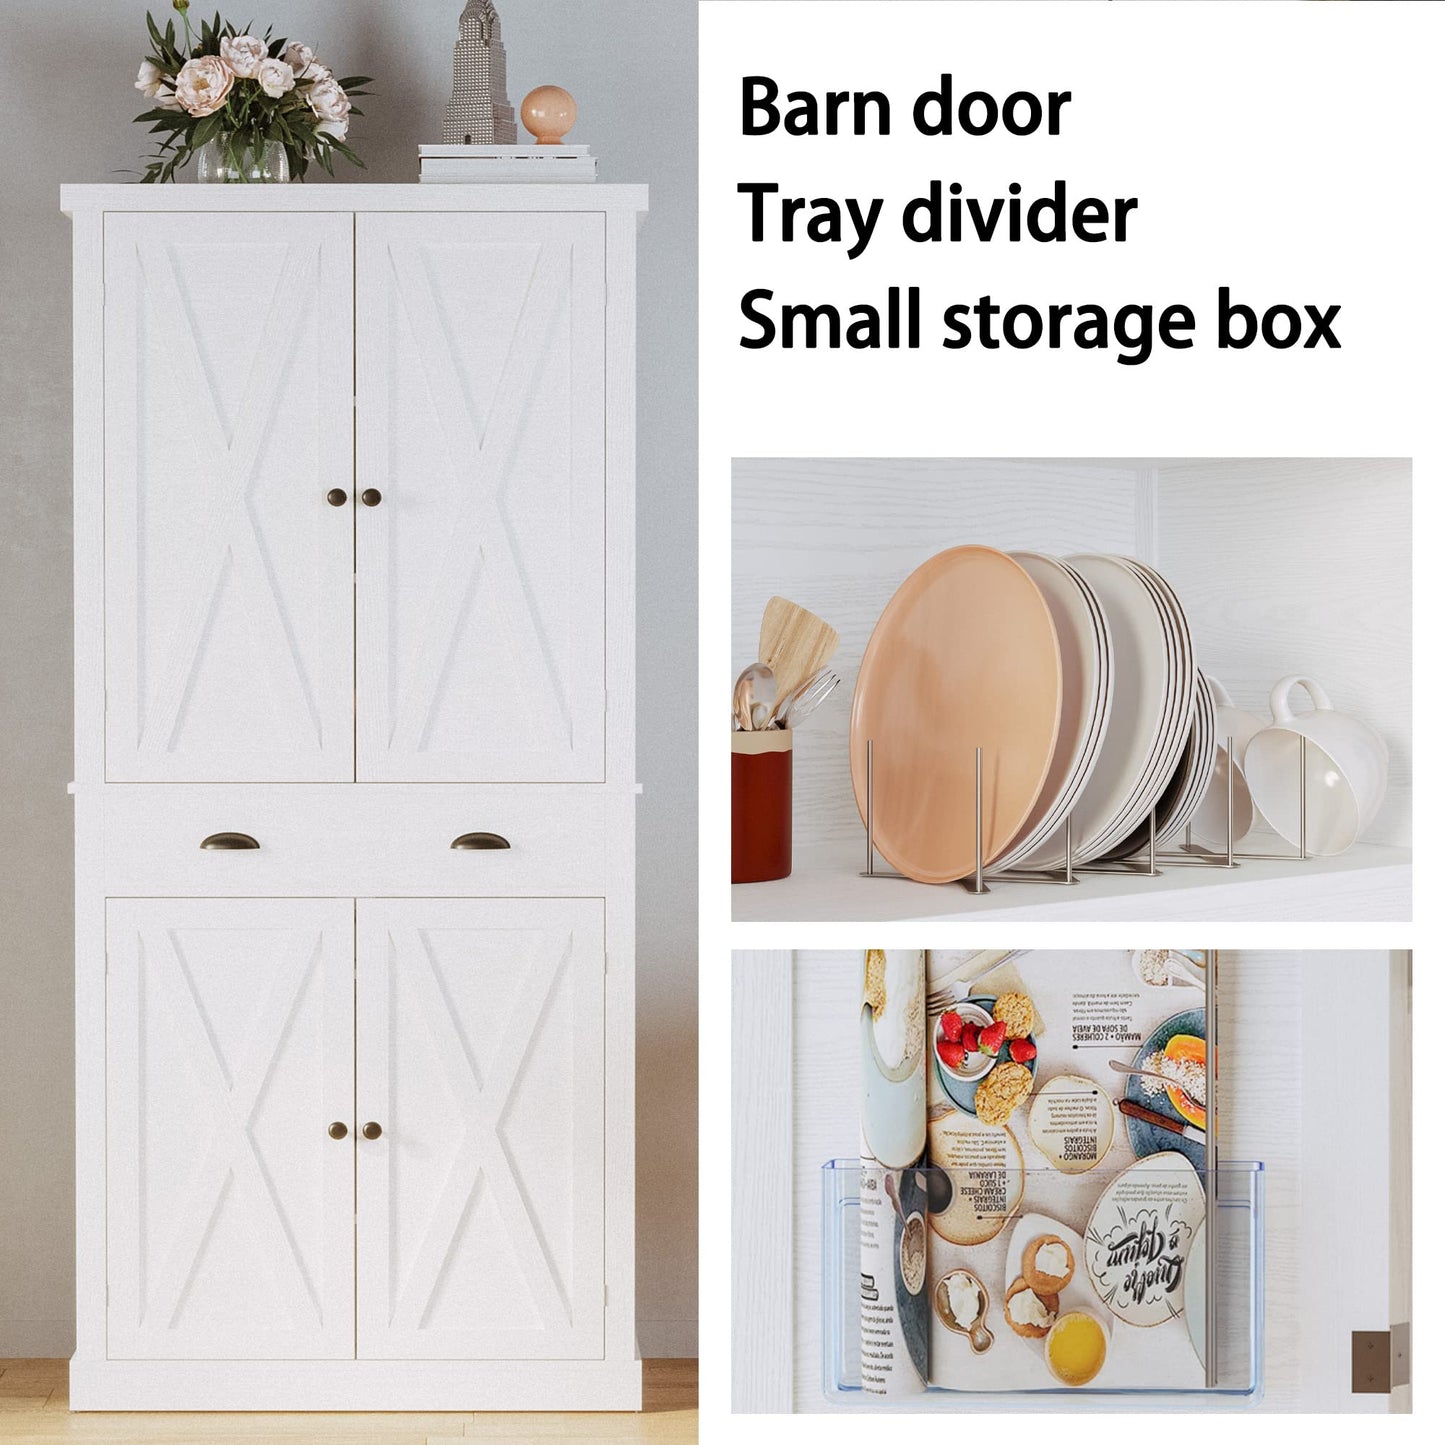 IRONCK Kitchen Pantry Storage Cabinet 72" Height, White, Barn Doors, Adjustable Shelves